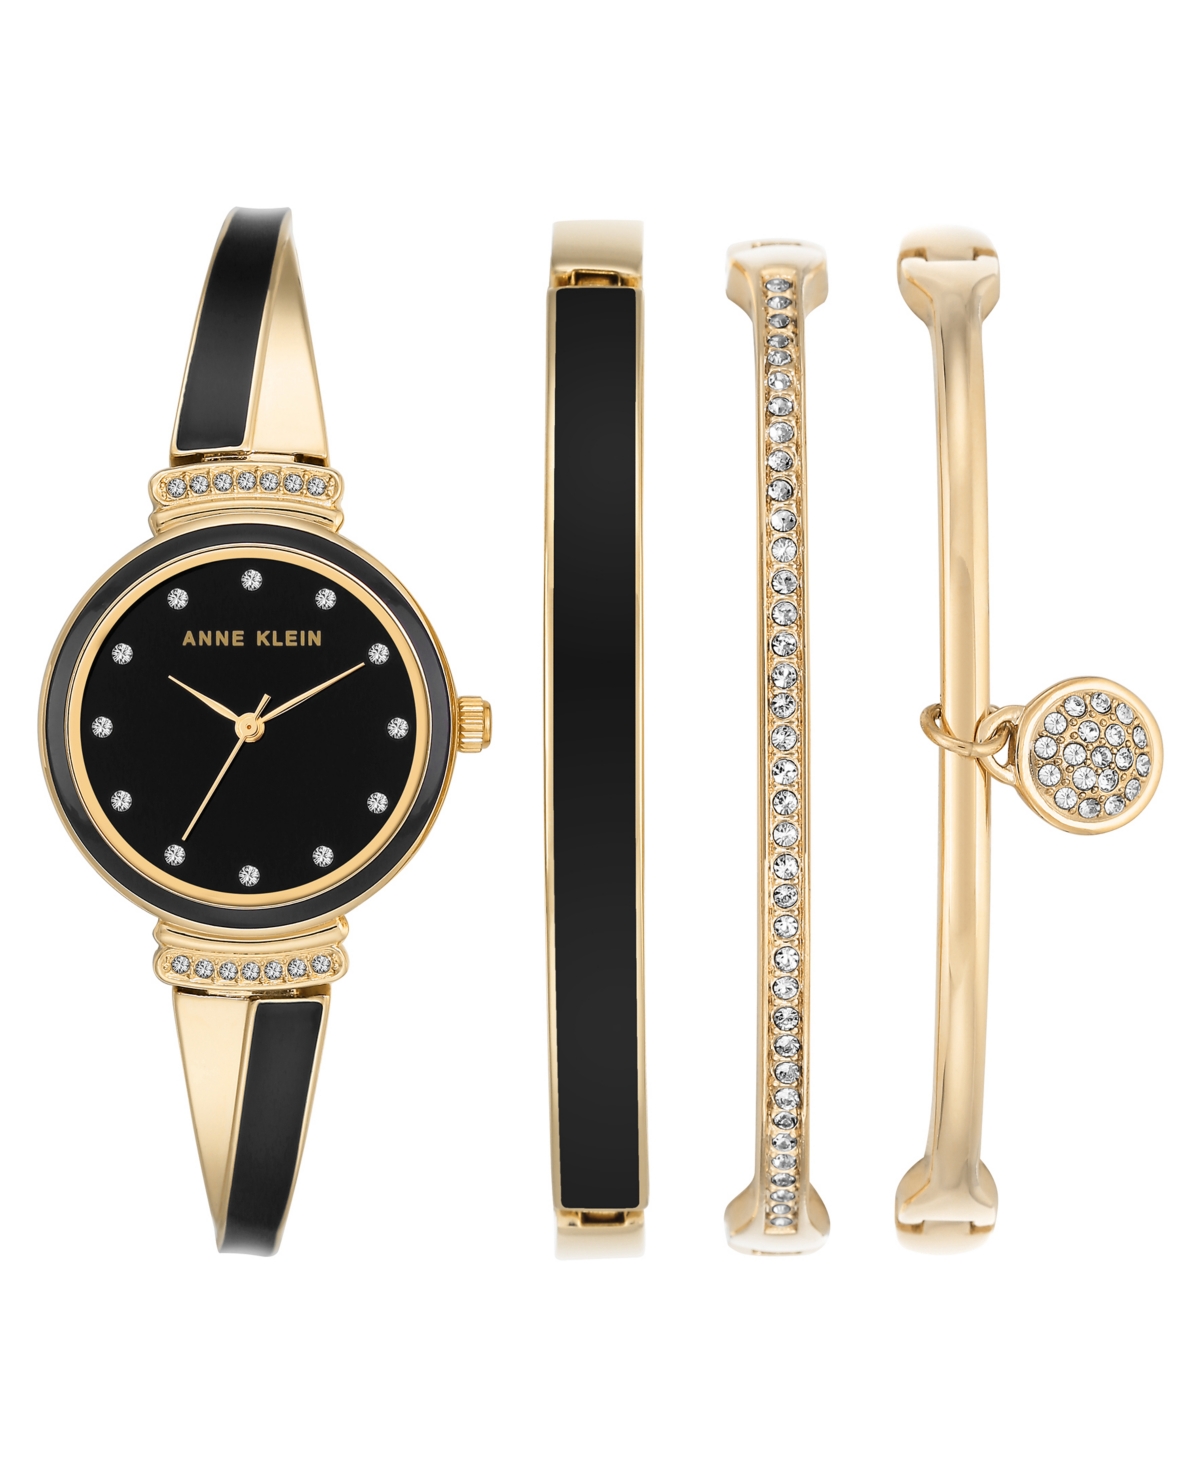 Women's Gold-Tone Alloy Bangle with Black Enamel Fashion Watch 33.5mm and Bracelet Set - Black, Gold-Tone